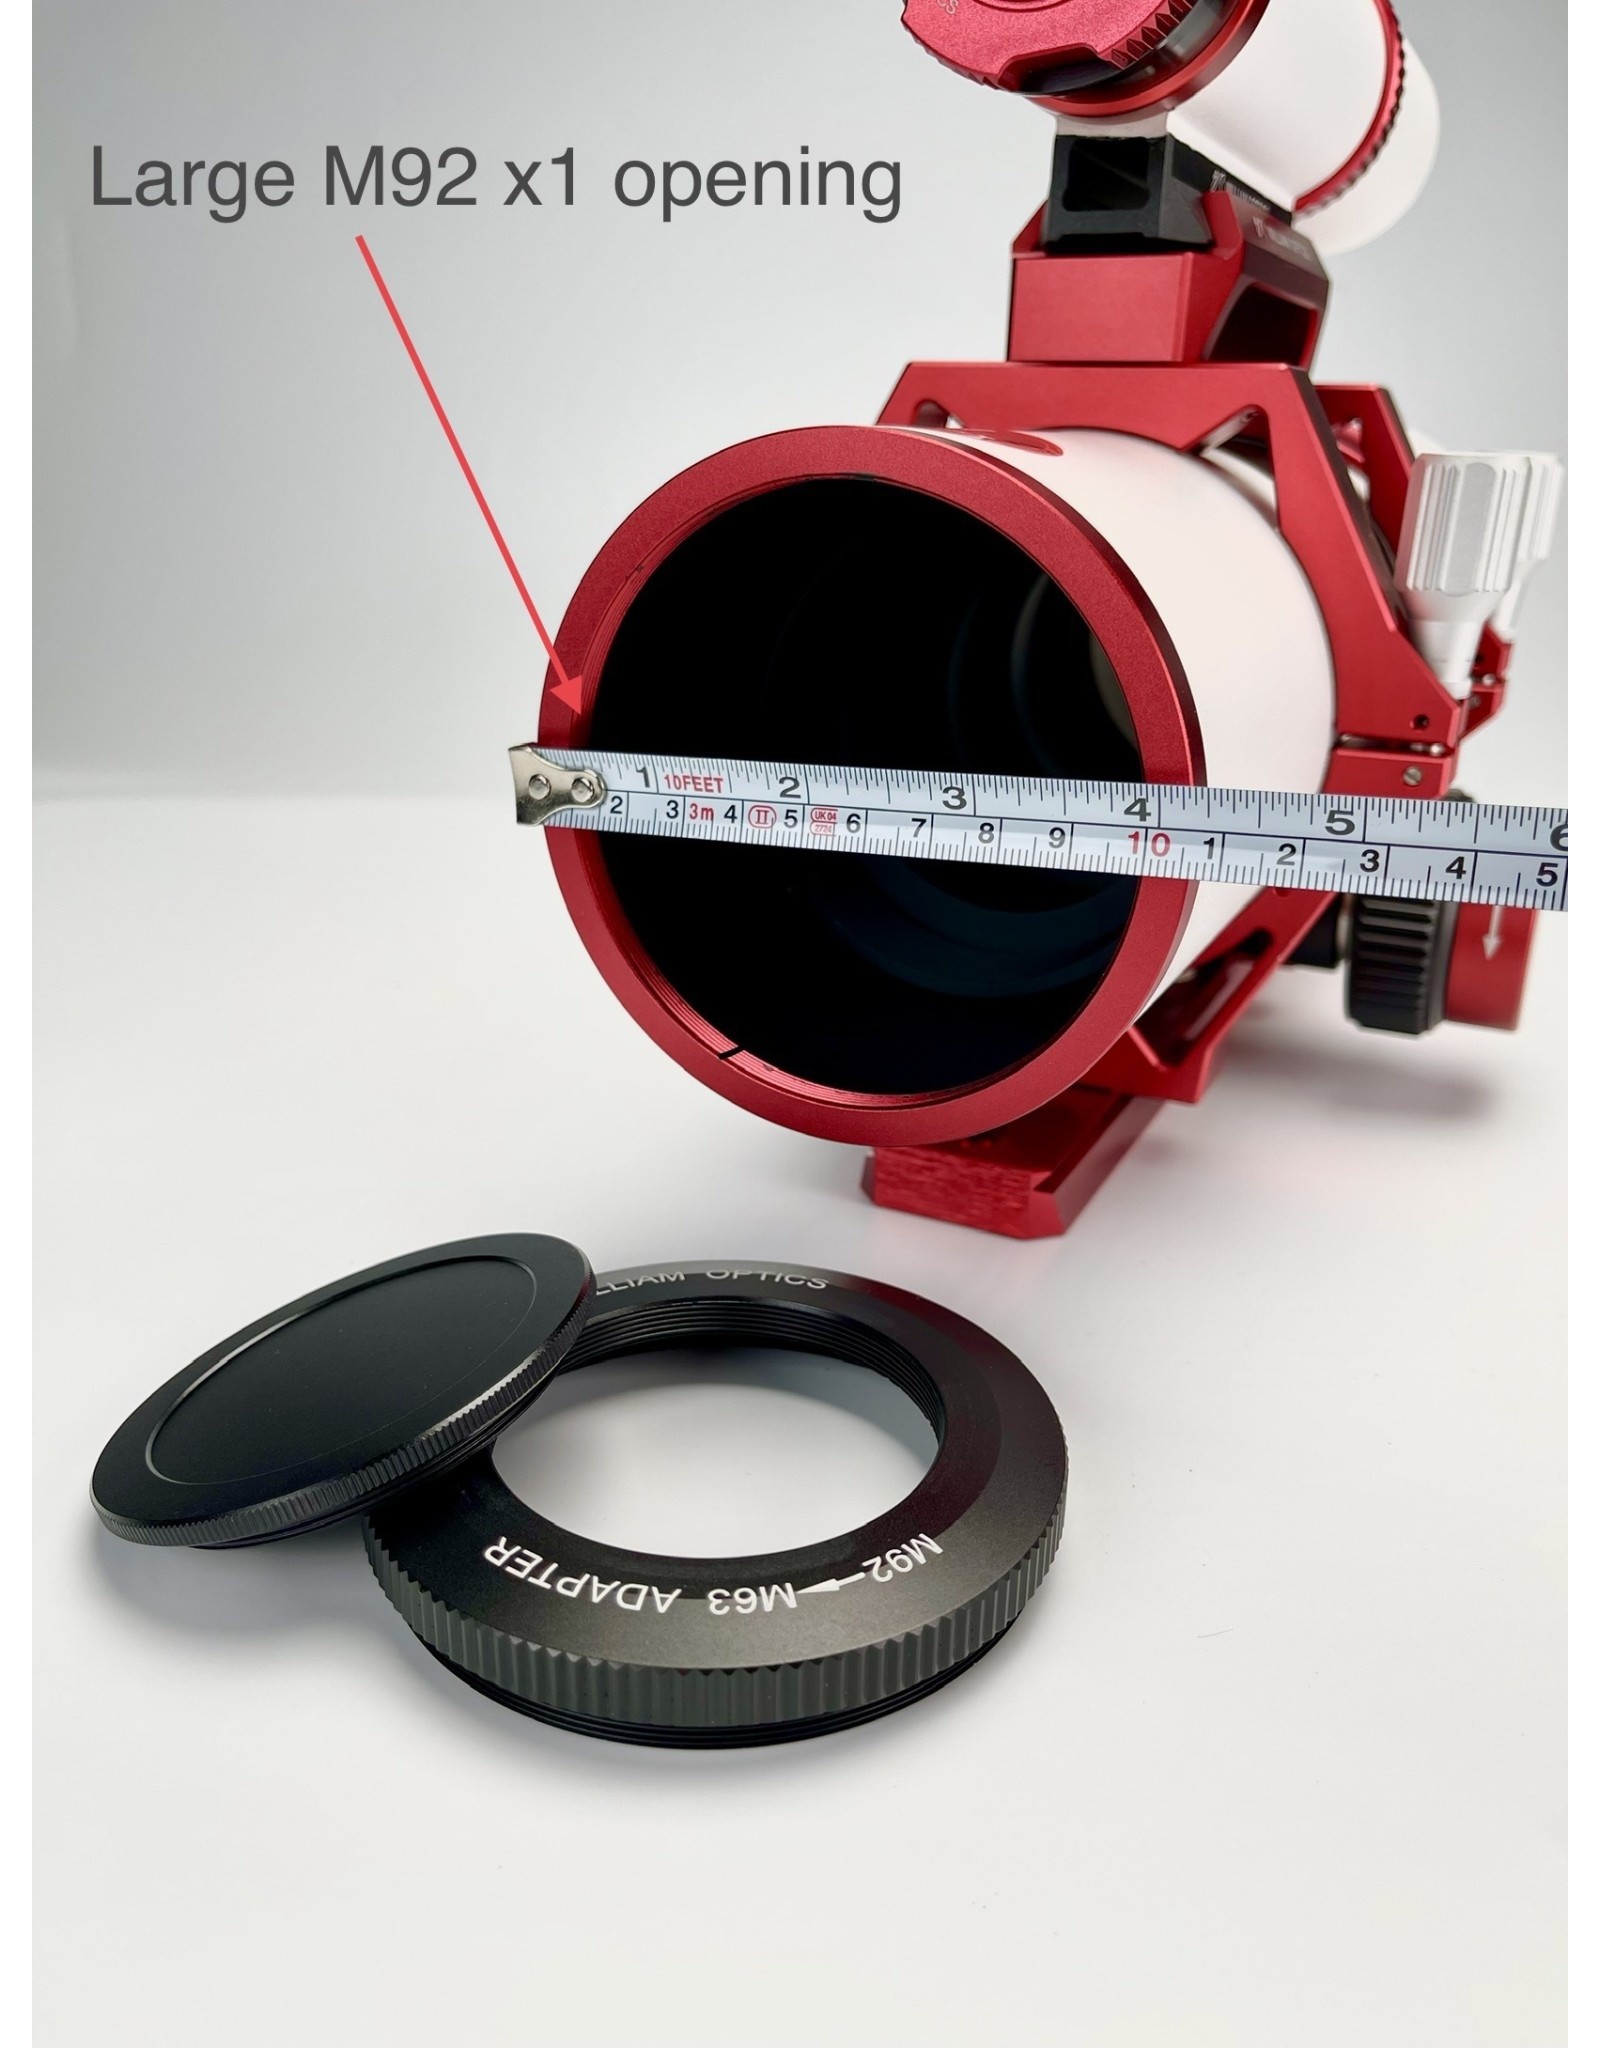 William Optics Willam Optics GT81 with Internal Focus Design (WIFD) Apochromatic Series (SPECIFY COLOR)